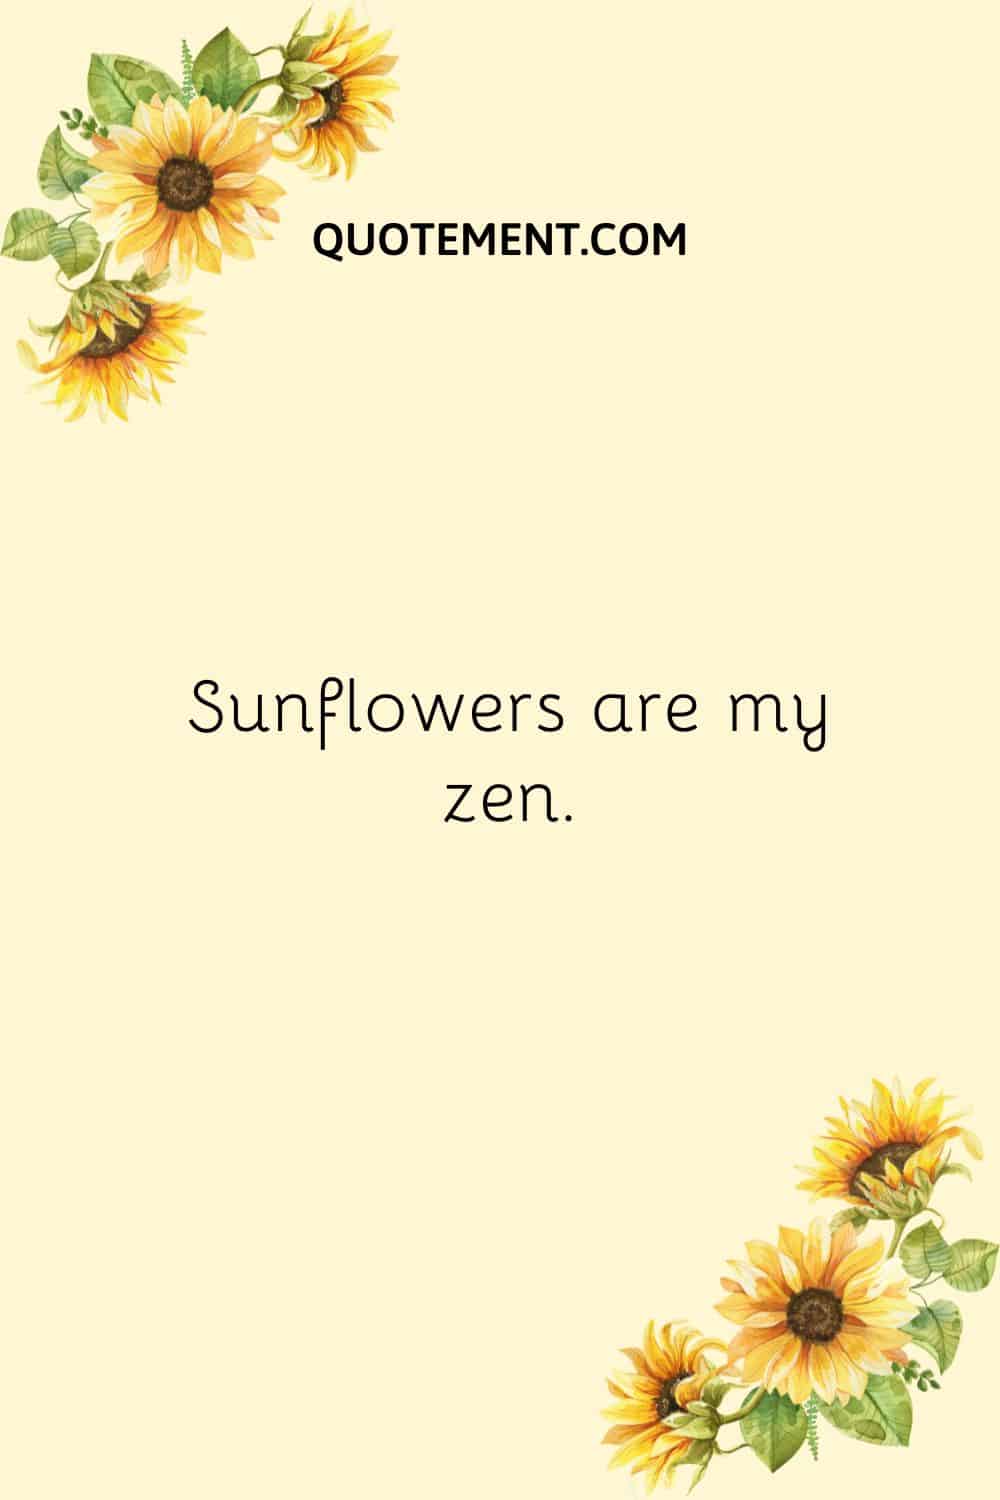 Sunflowers are my zen.